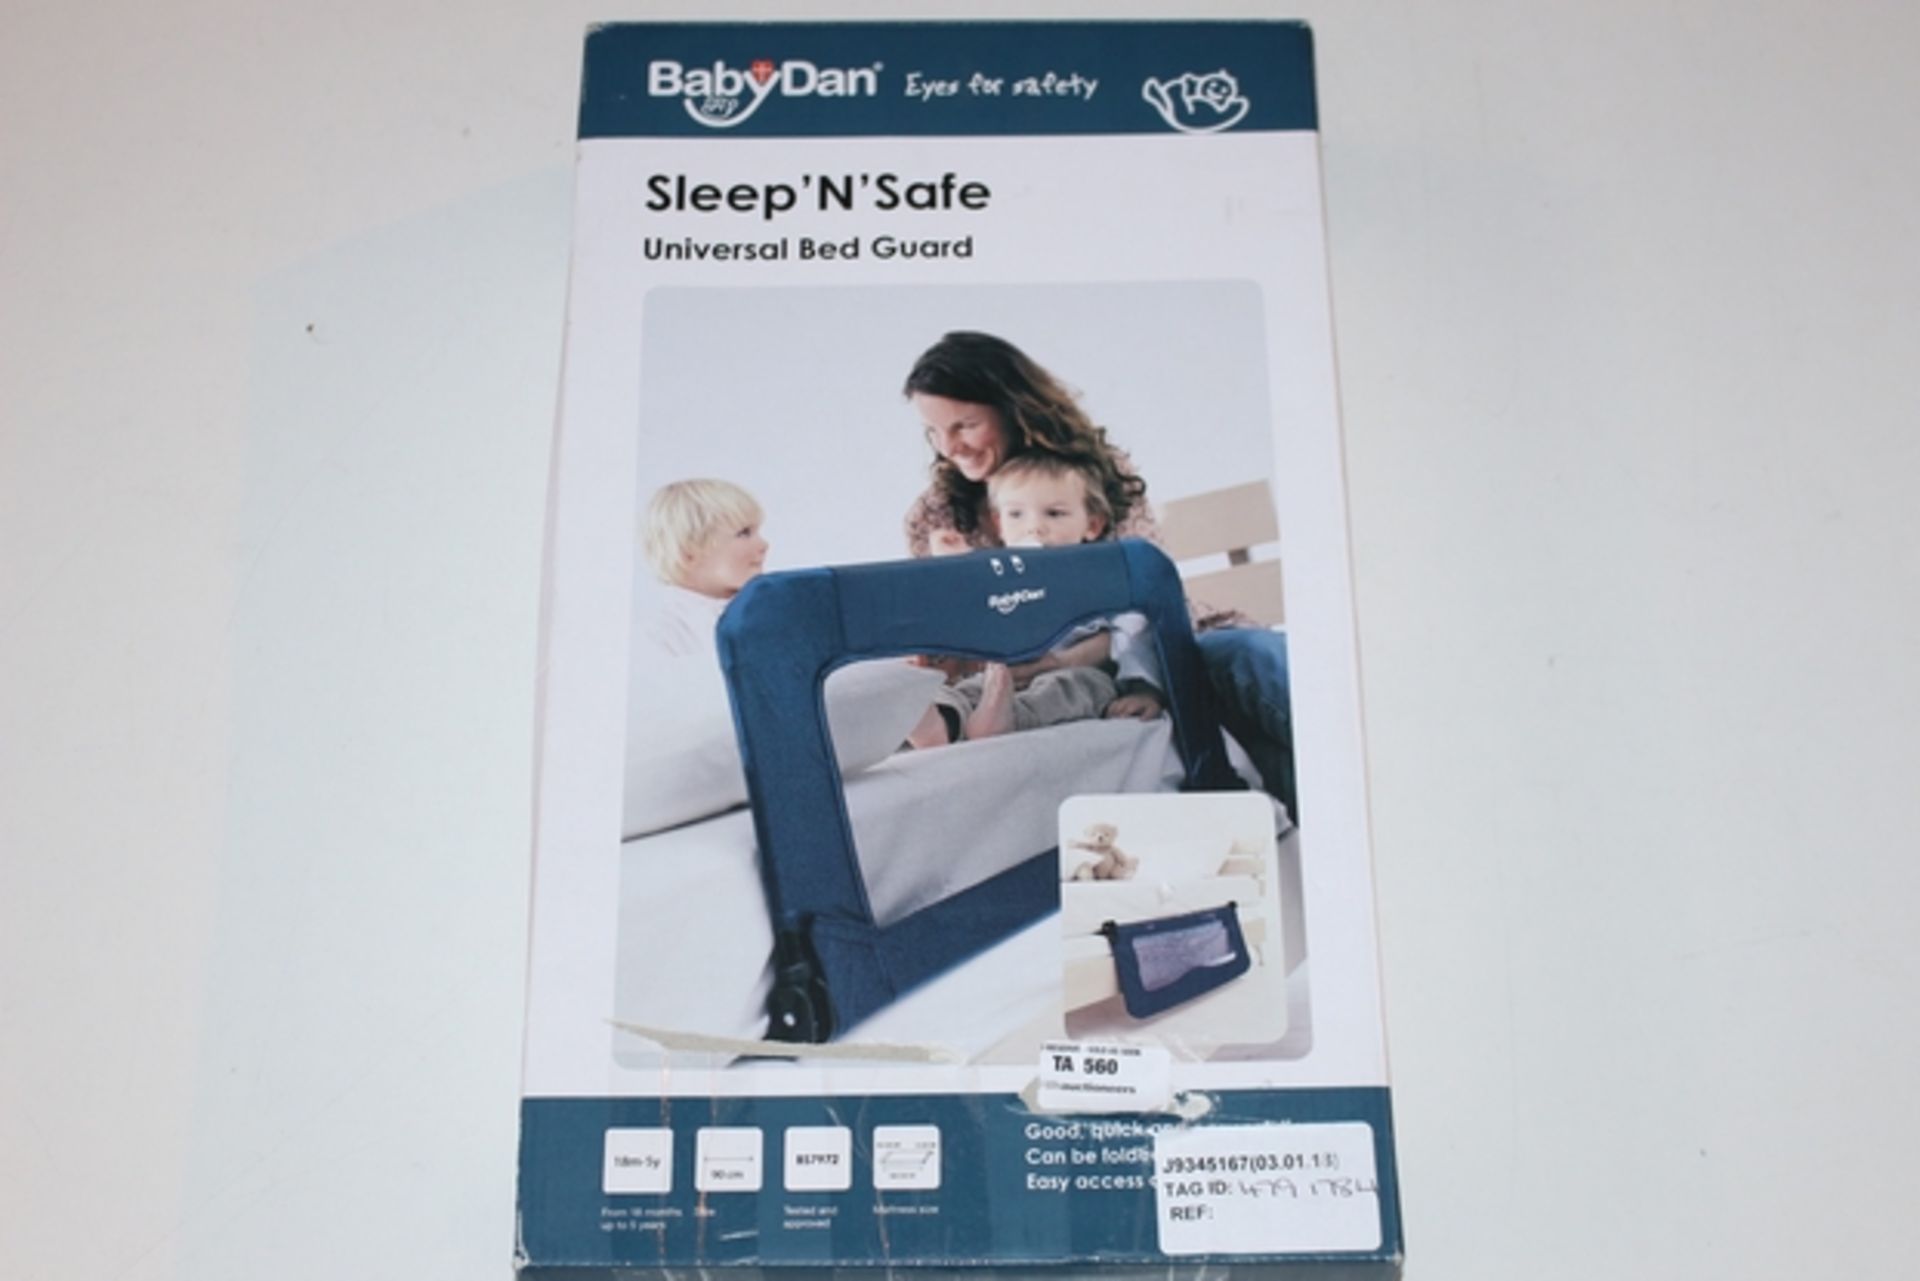 1X BABY DAN SLEEP N SAFE UNIVERSAL BED GUARD RRP £30 (JL-9345167) (03/01/18) (4791784)